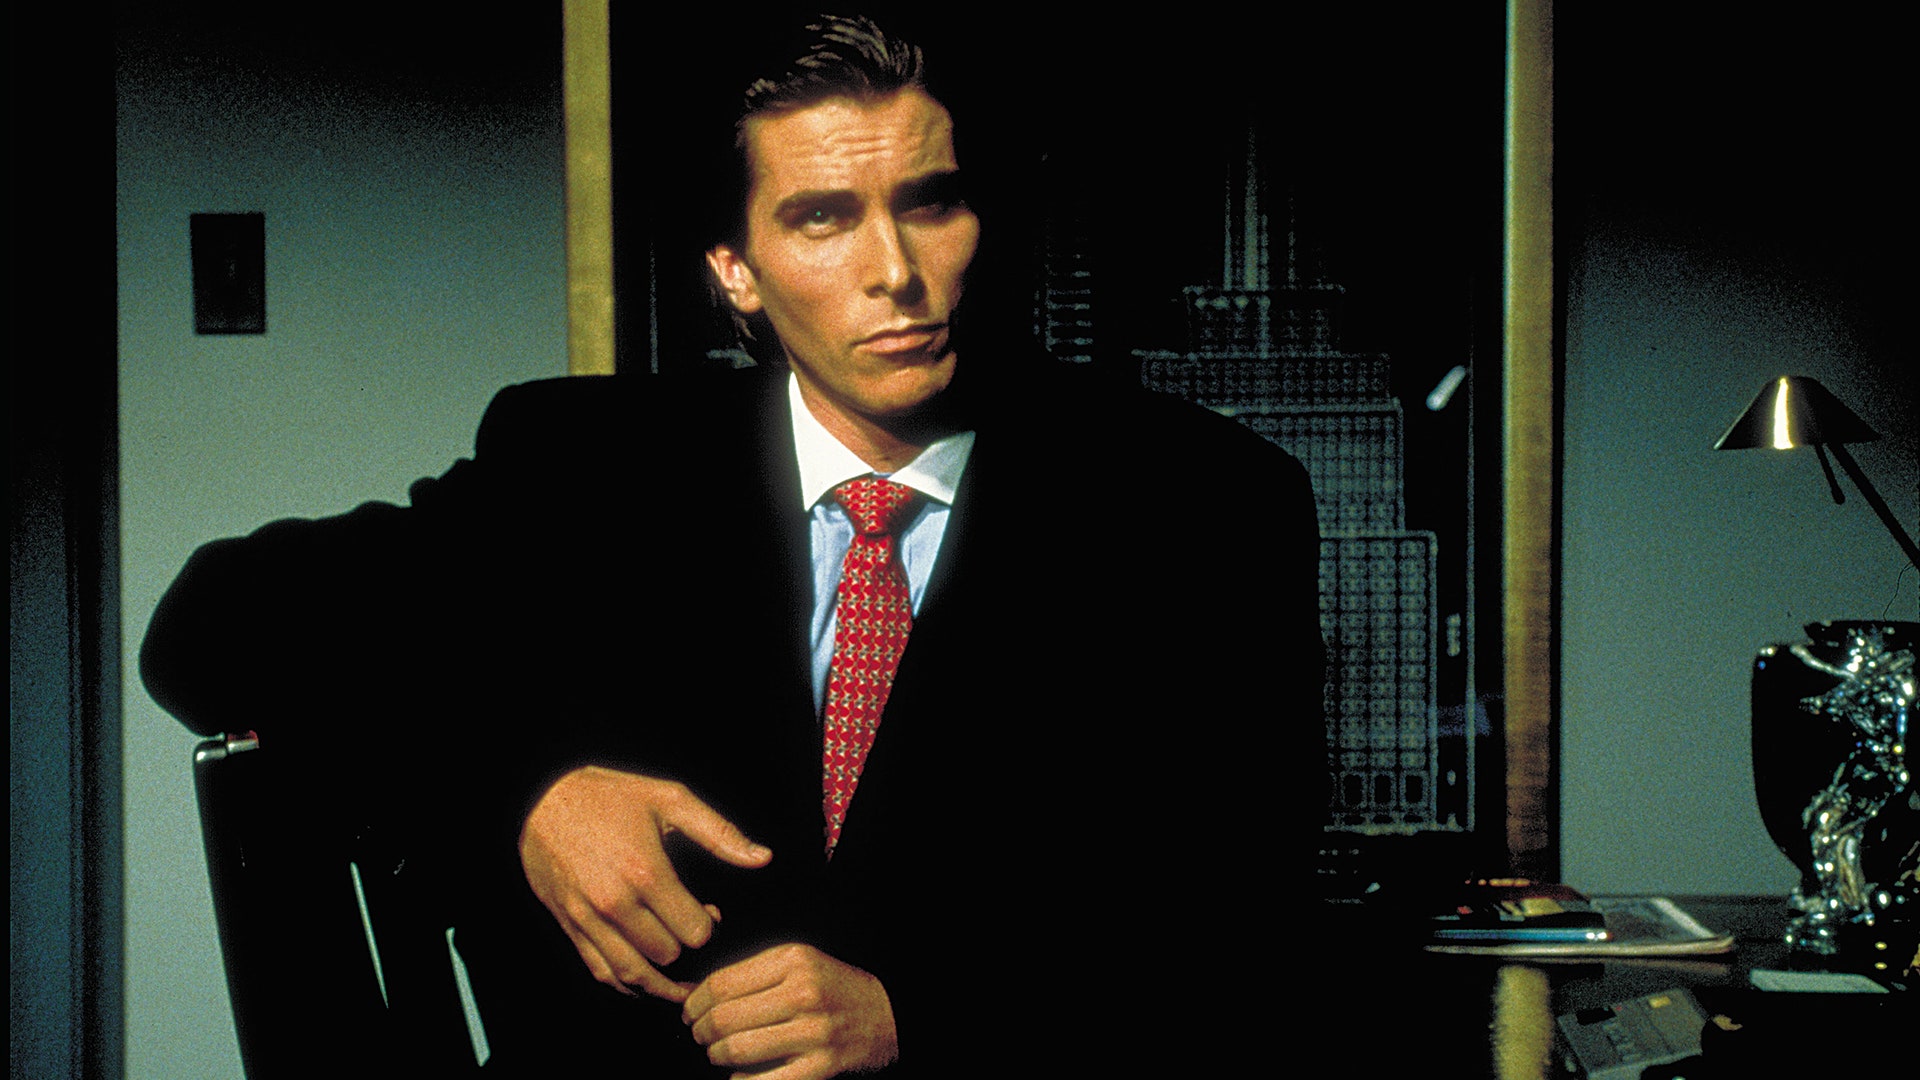 American Psycho's Patrick Bateman nailed 1980s businessman style